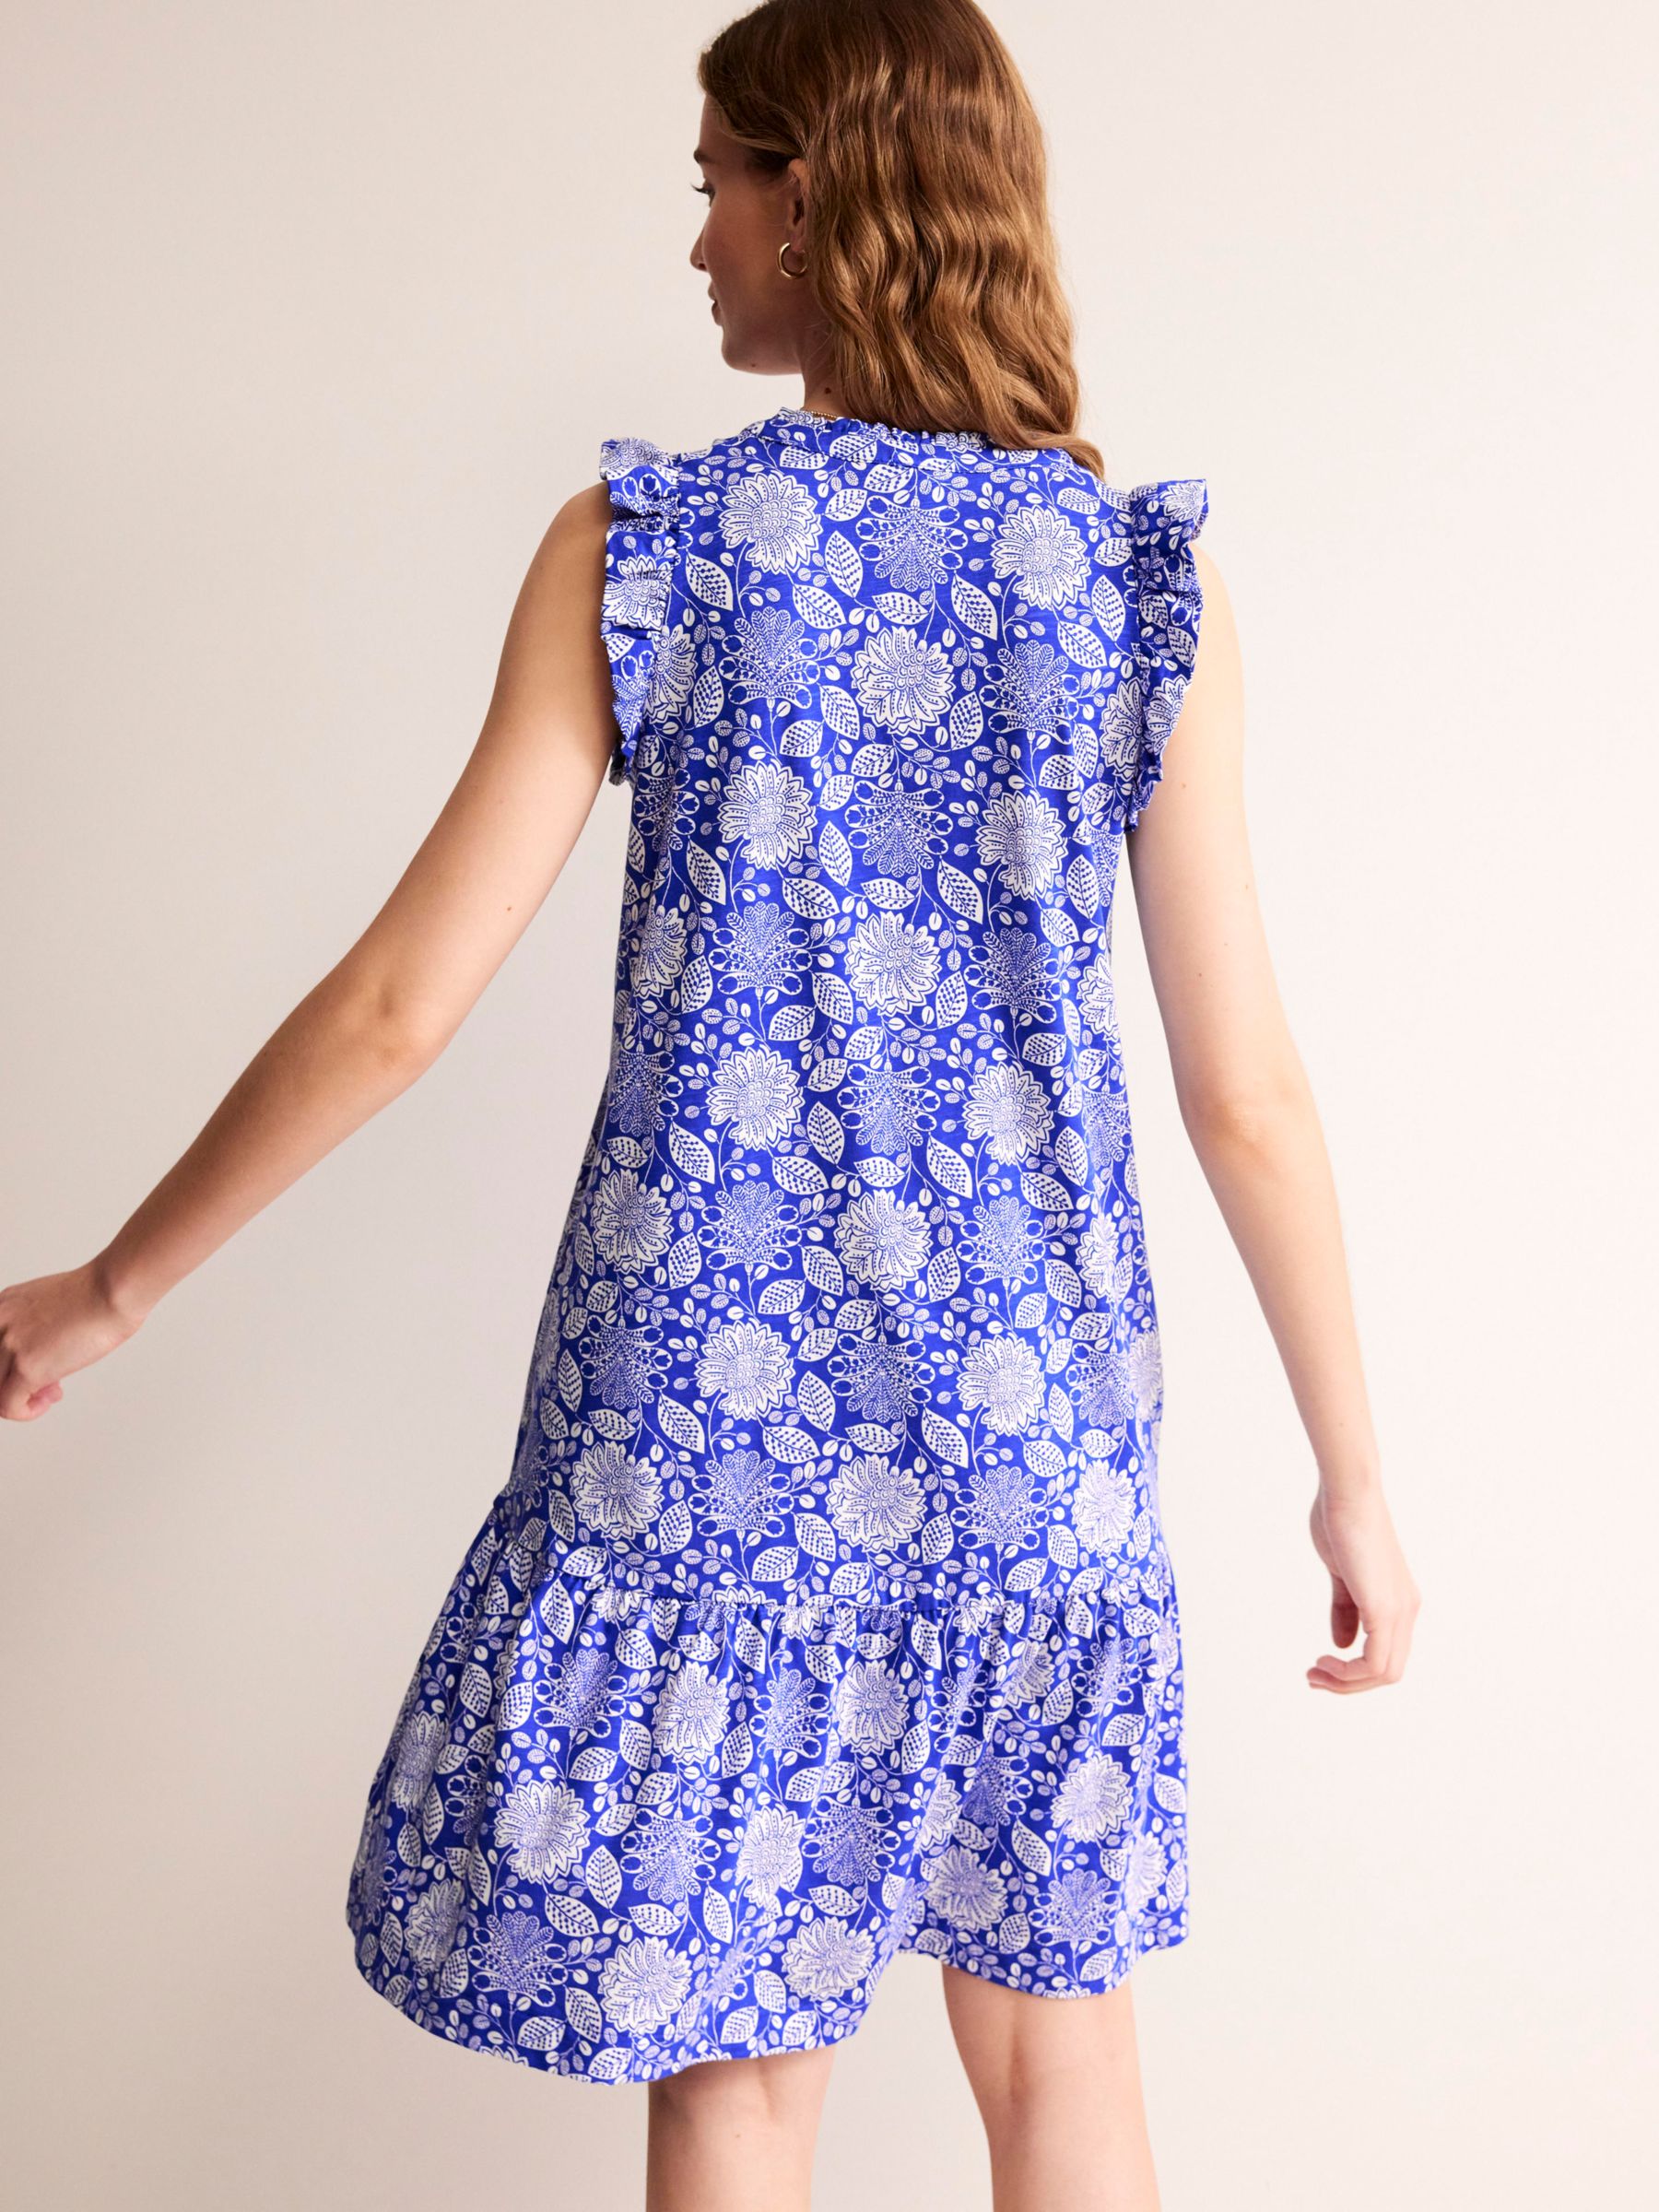 Boden Daisy Botanical Print Jersey Dress, Blue/White, 14